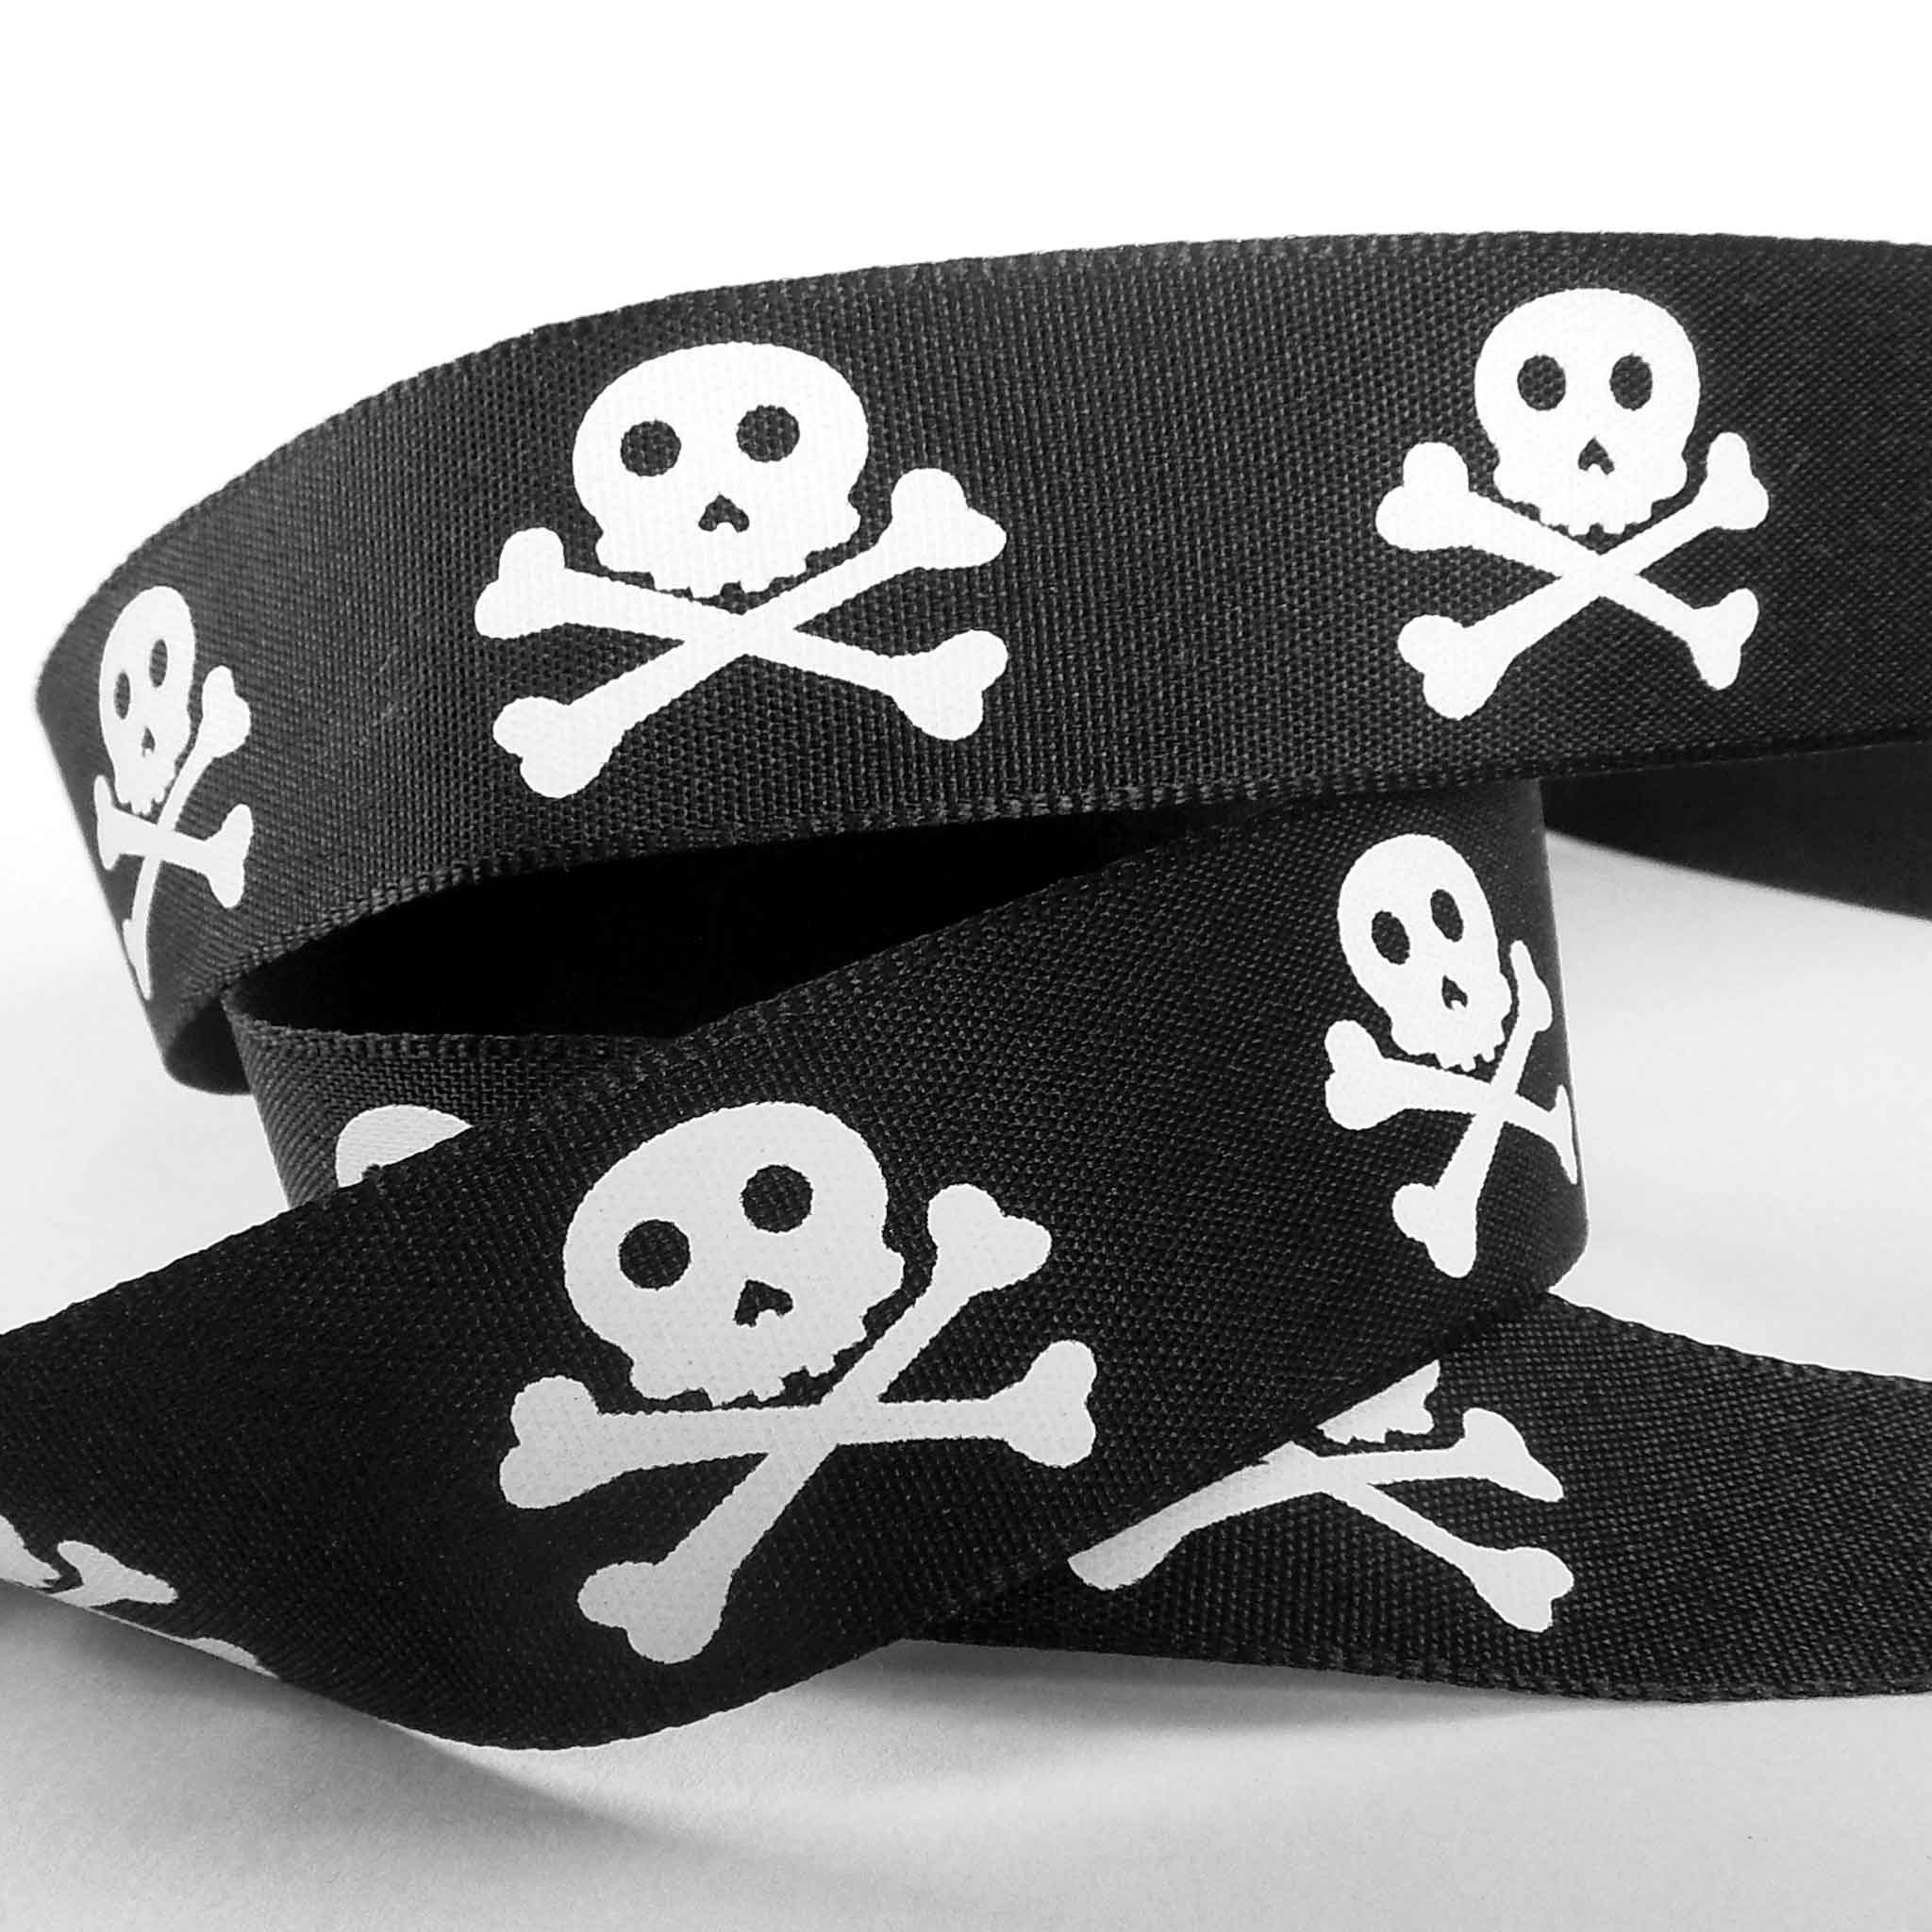 25mm Skull and Crossbones Pirate Ribbon - Black/White - Berisfords